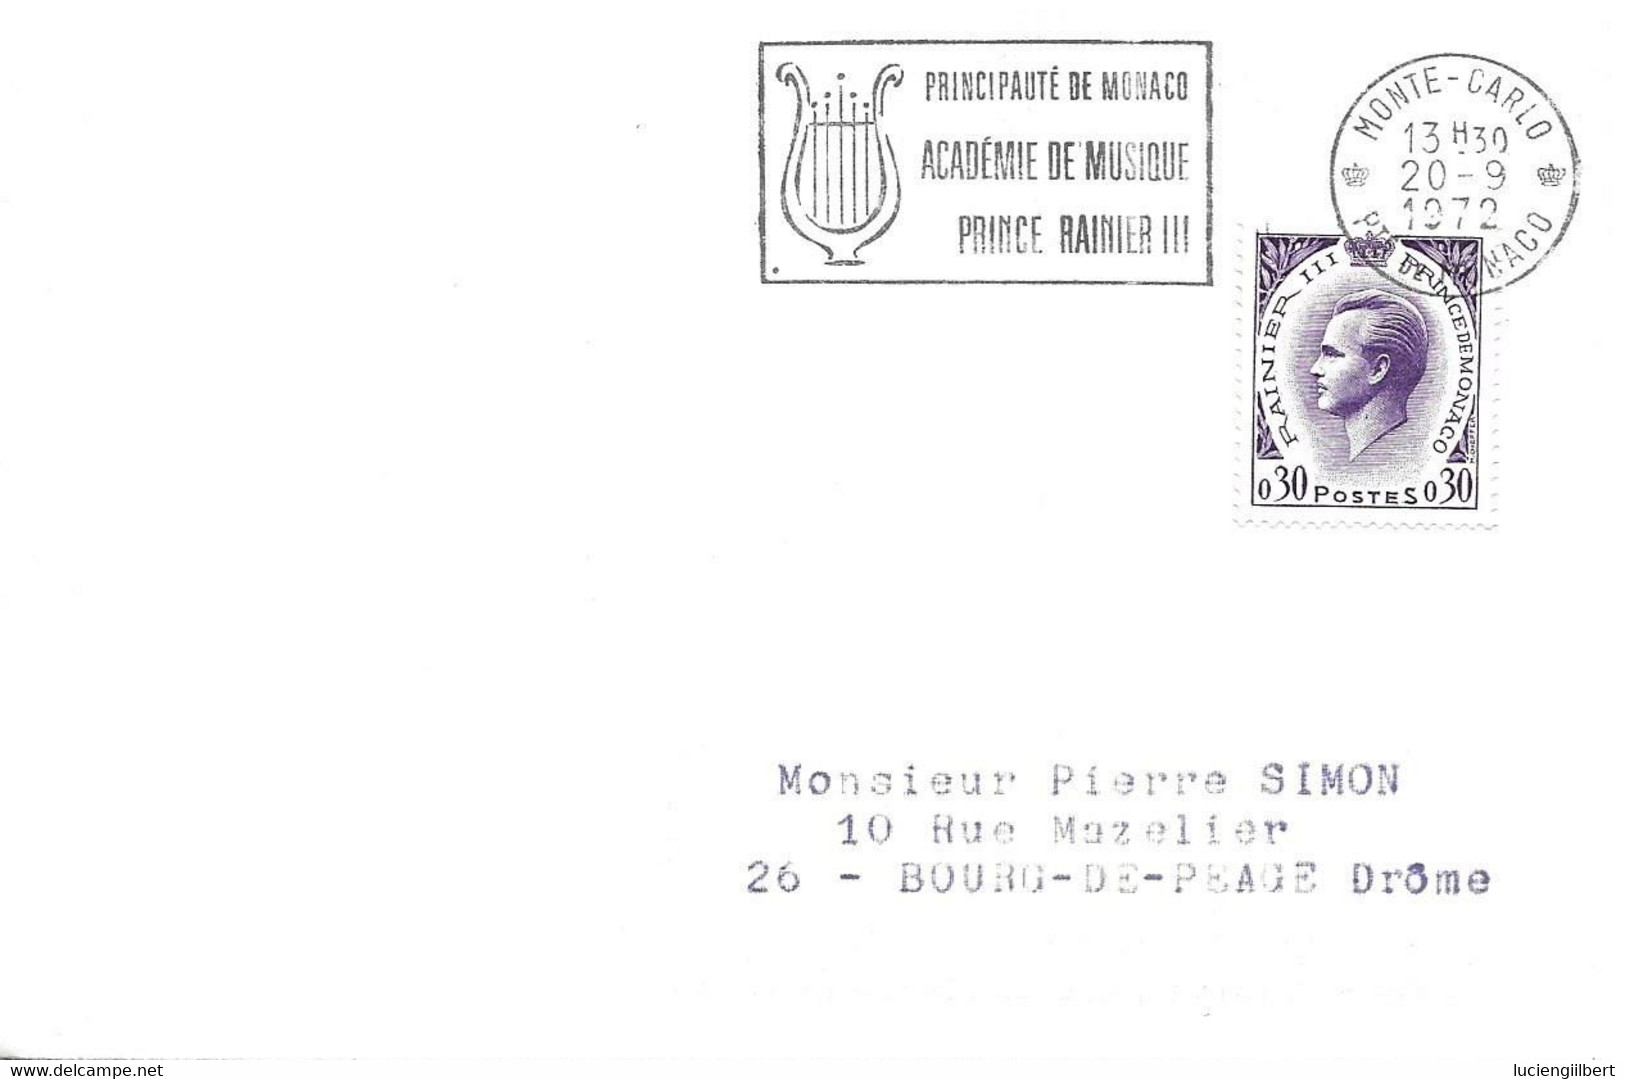 MONACO - TIMBRE N° 545   - RAINIER III  - 1972 - TARIF 14 1 71   - FLAMME  :  ACADEMIE DE MUSIQUE PRINCE RAINIERIII - Covers & Documents